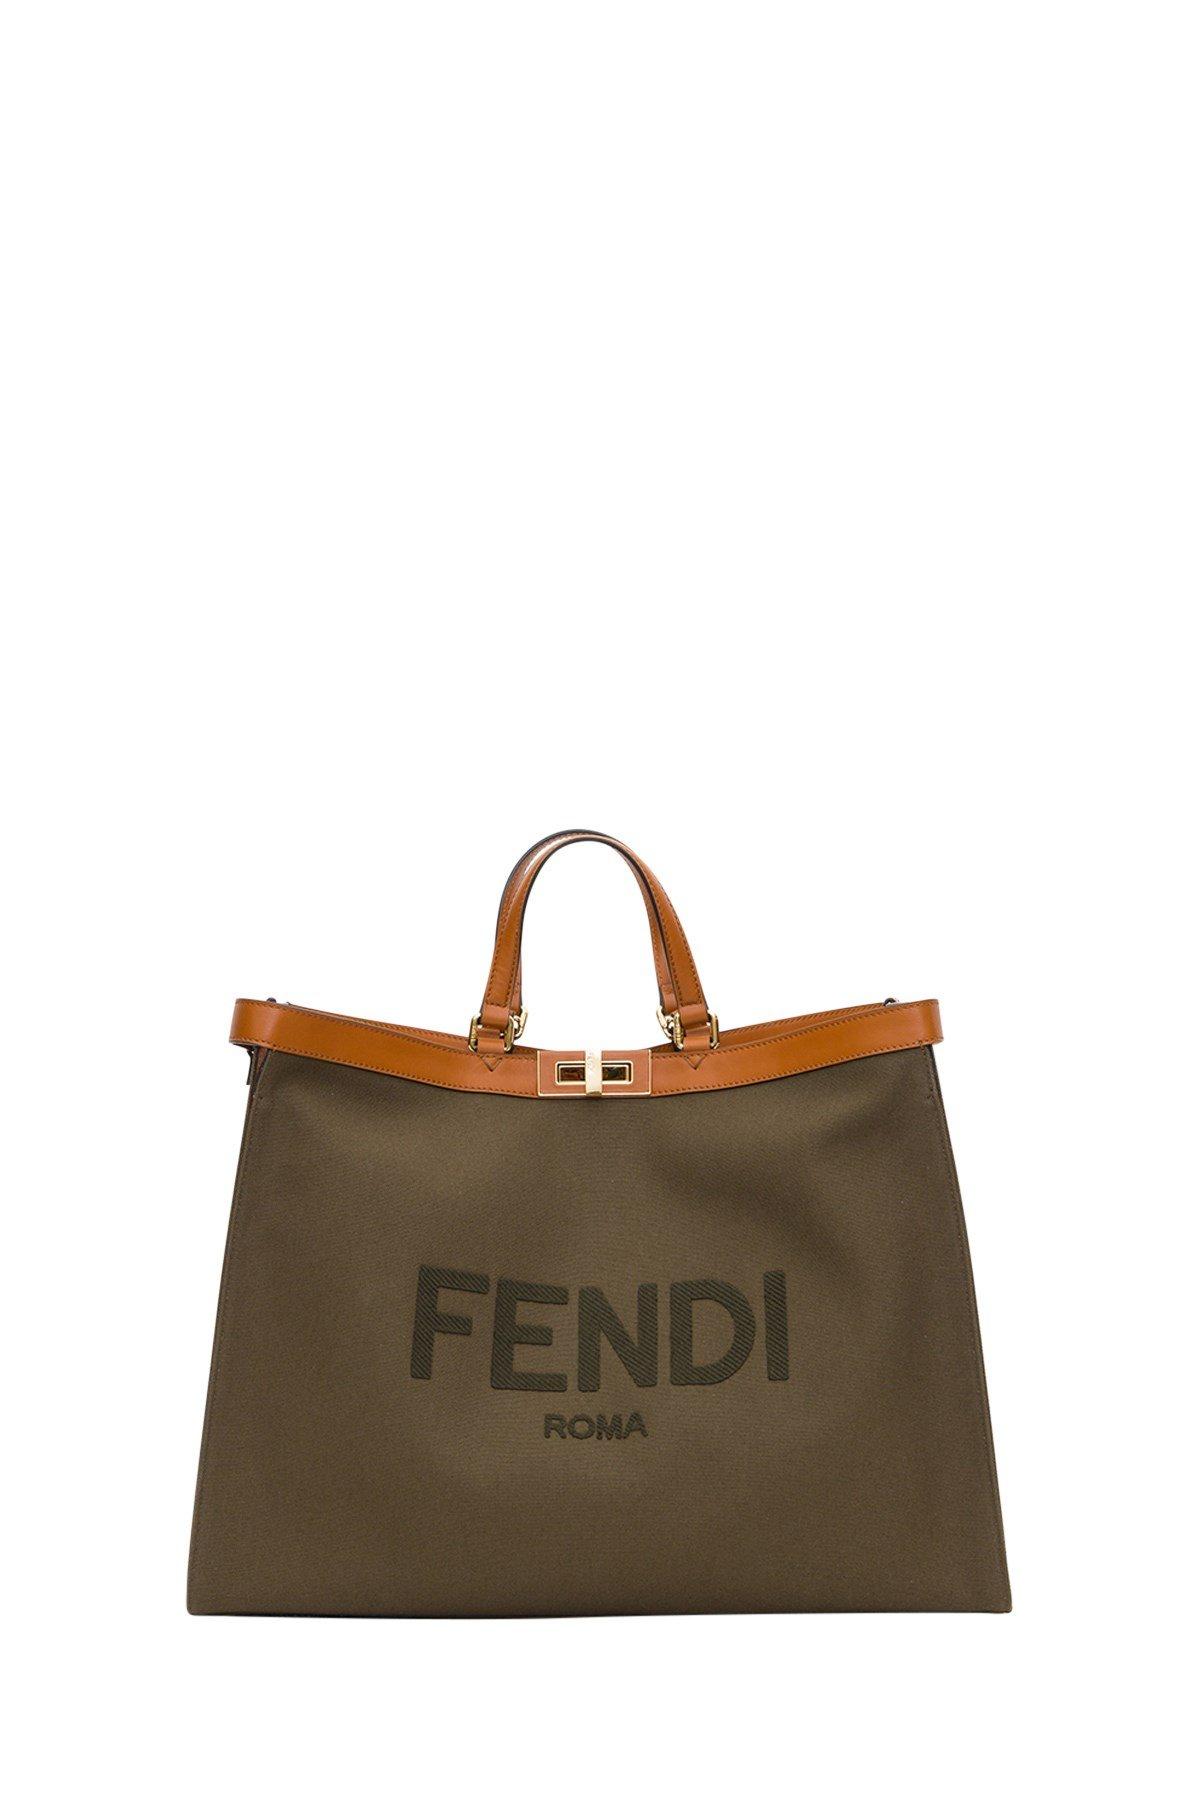 Fendi Peekaboo X-tote Large Bag in Green | Lyst